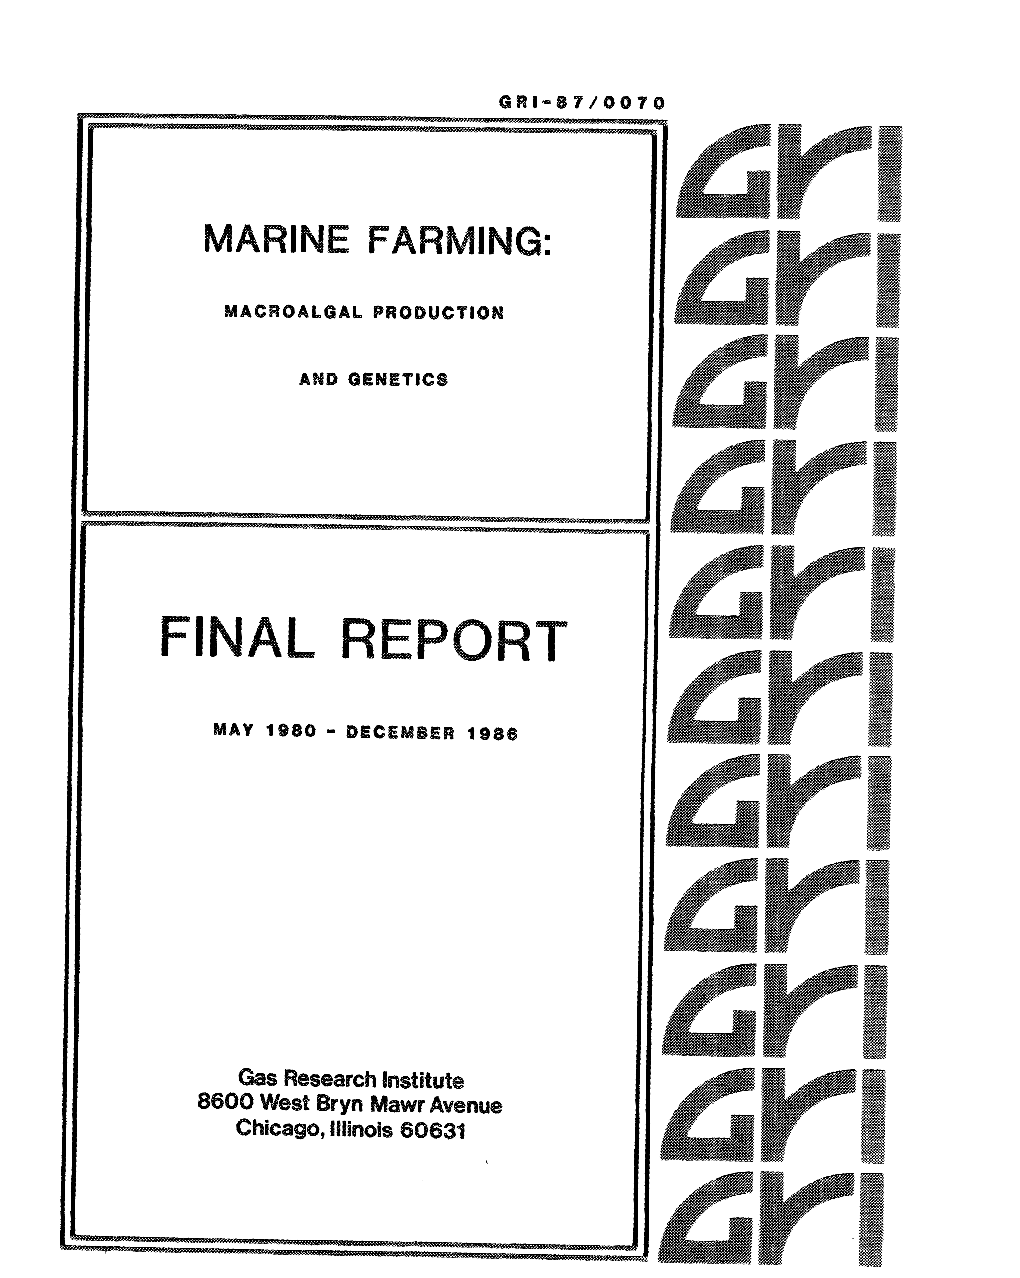 Marine Farming: Macroalgal Production and Genetics